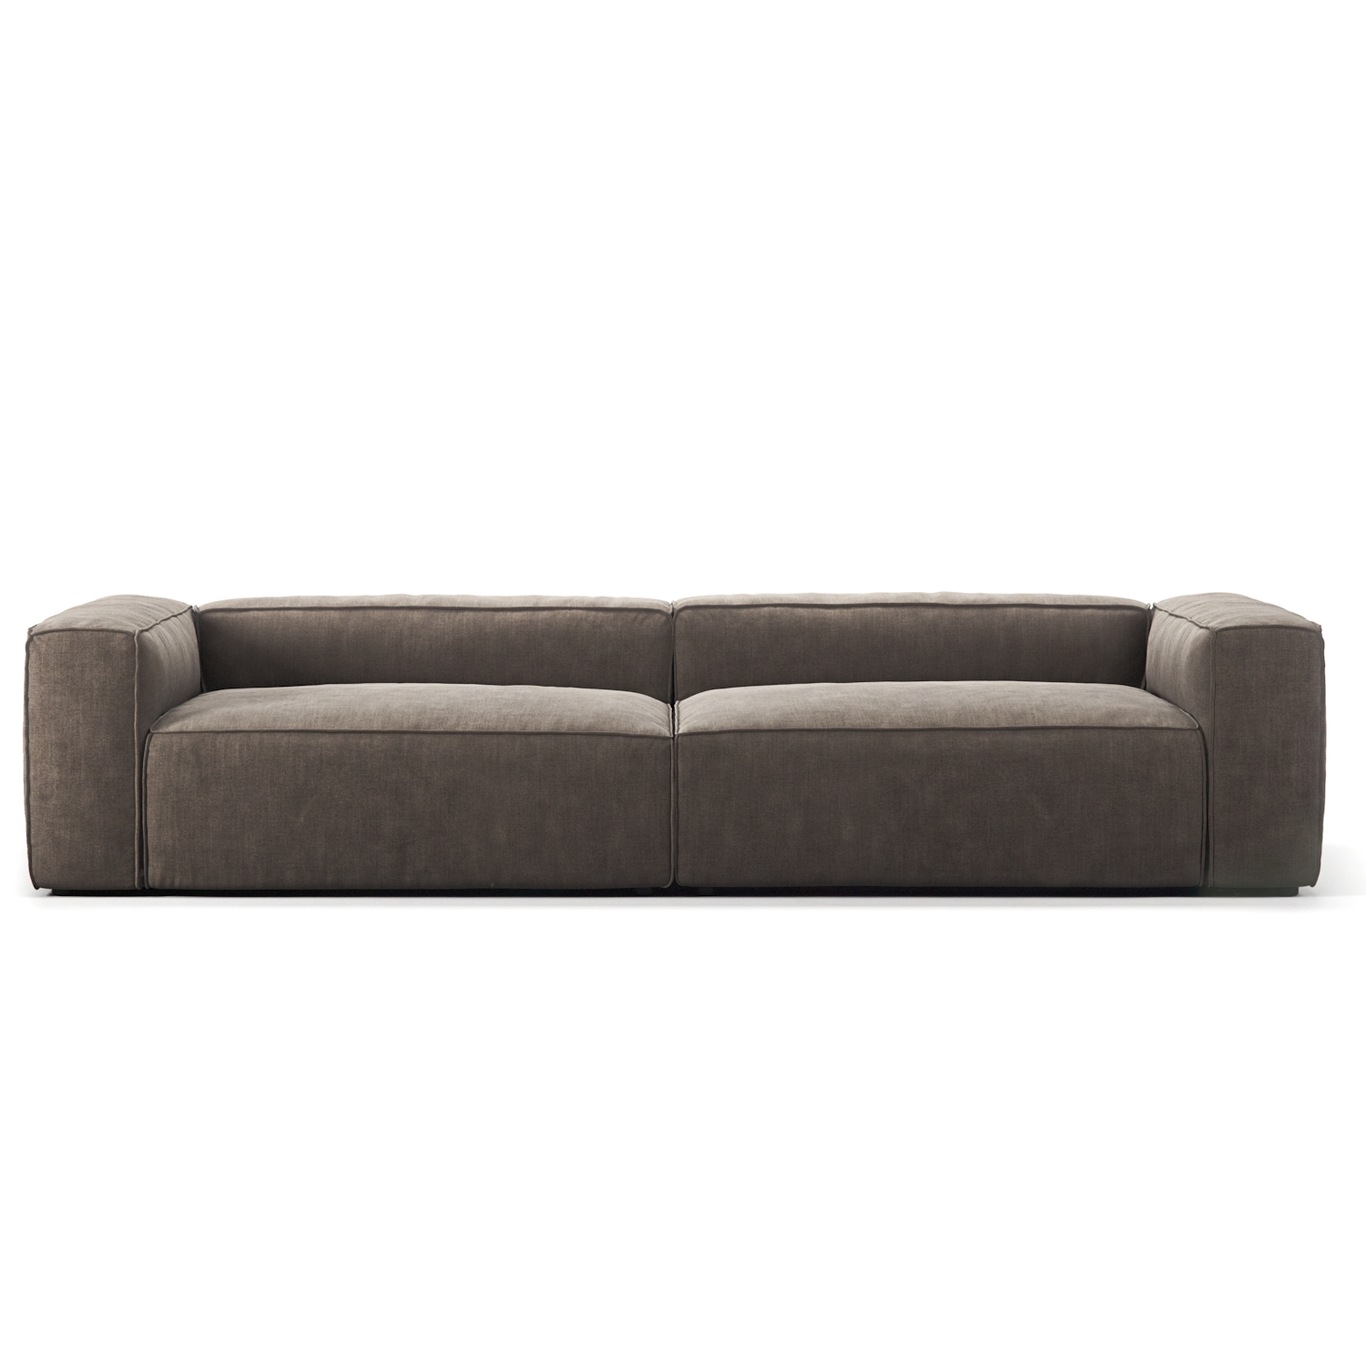 Grand 4-Seter Sofa, Mole Brown